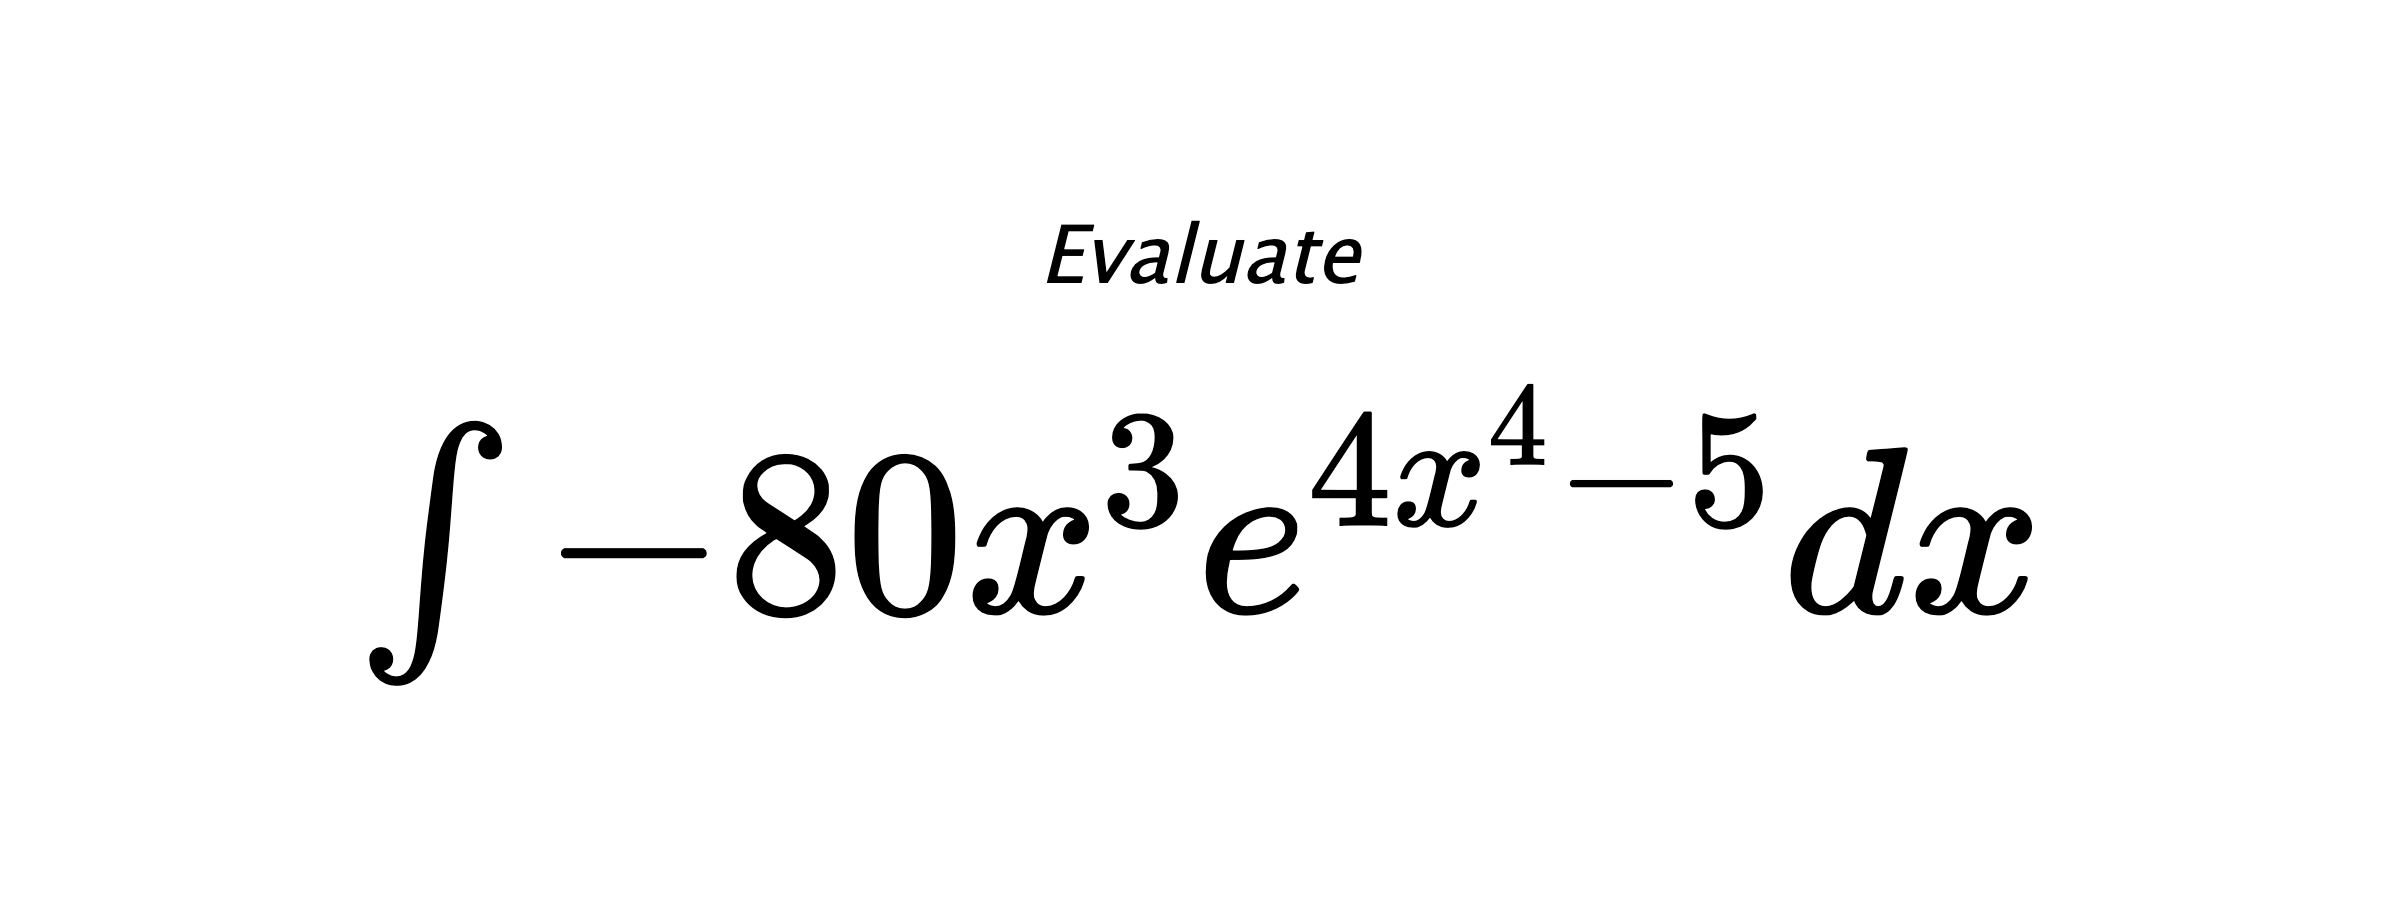 Evaluate $ \int -80x^3e^{4x^4-5}dx $